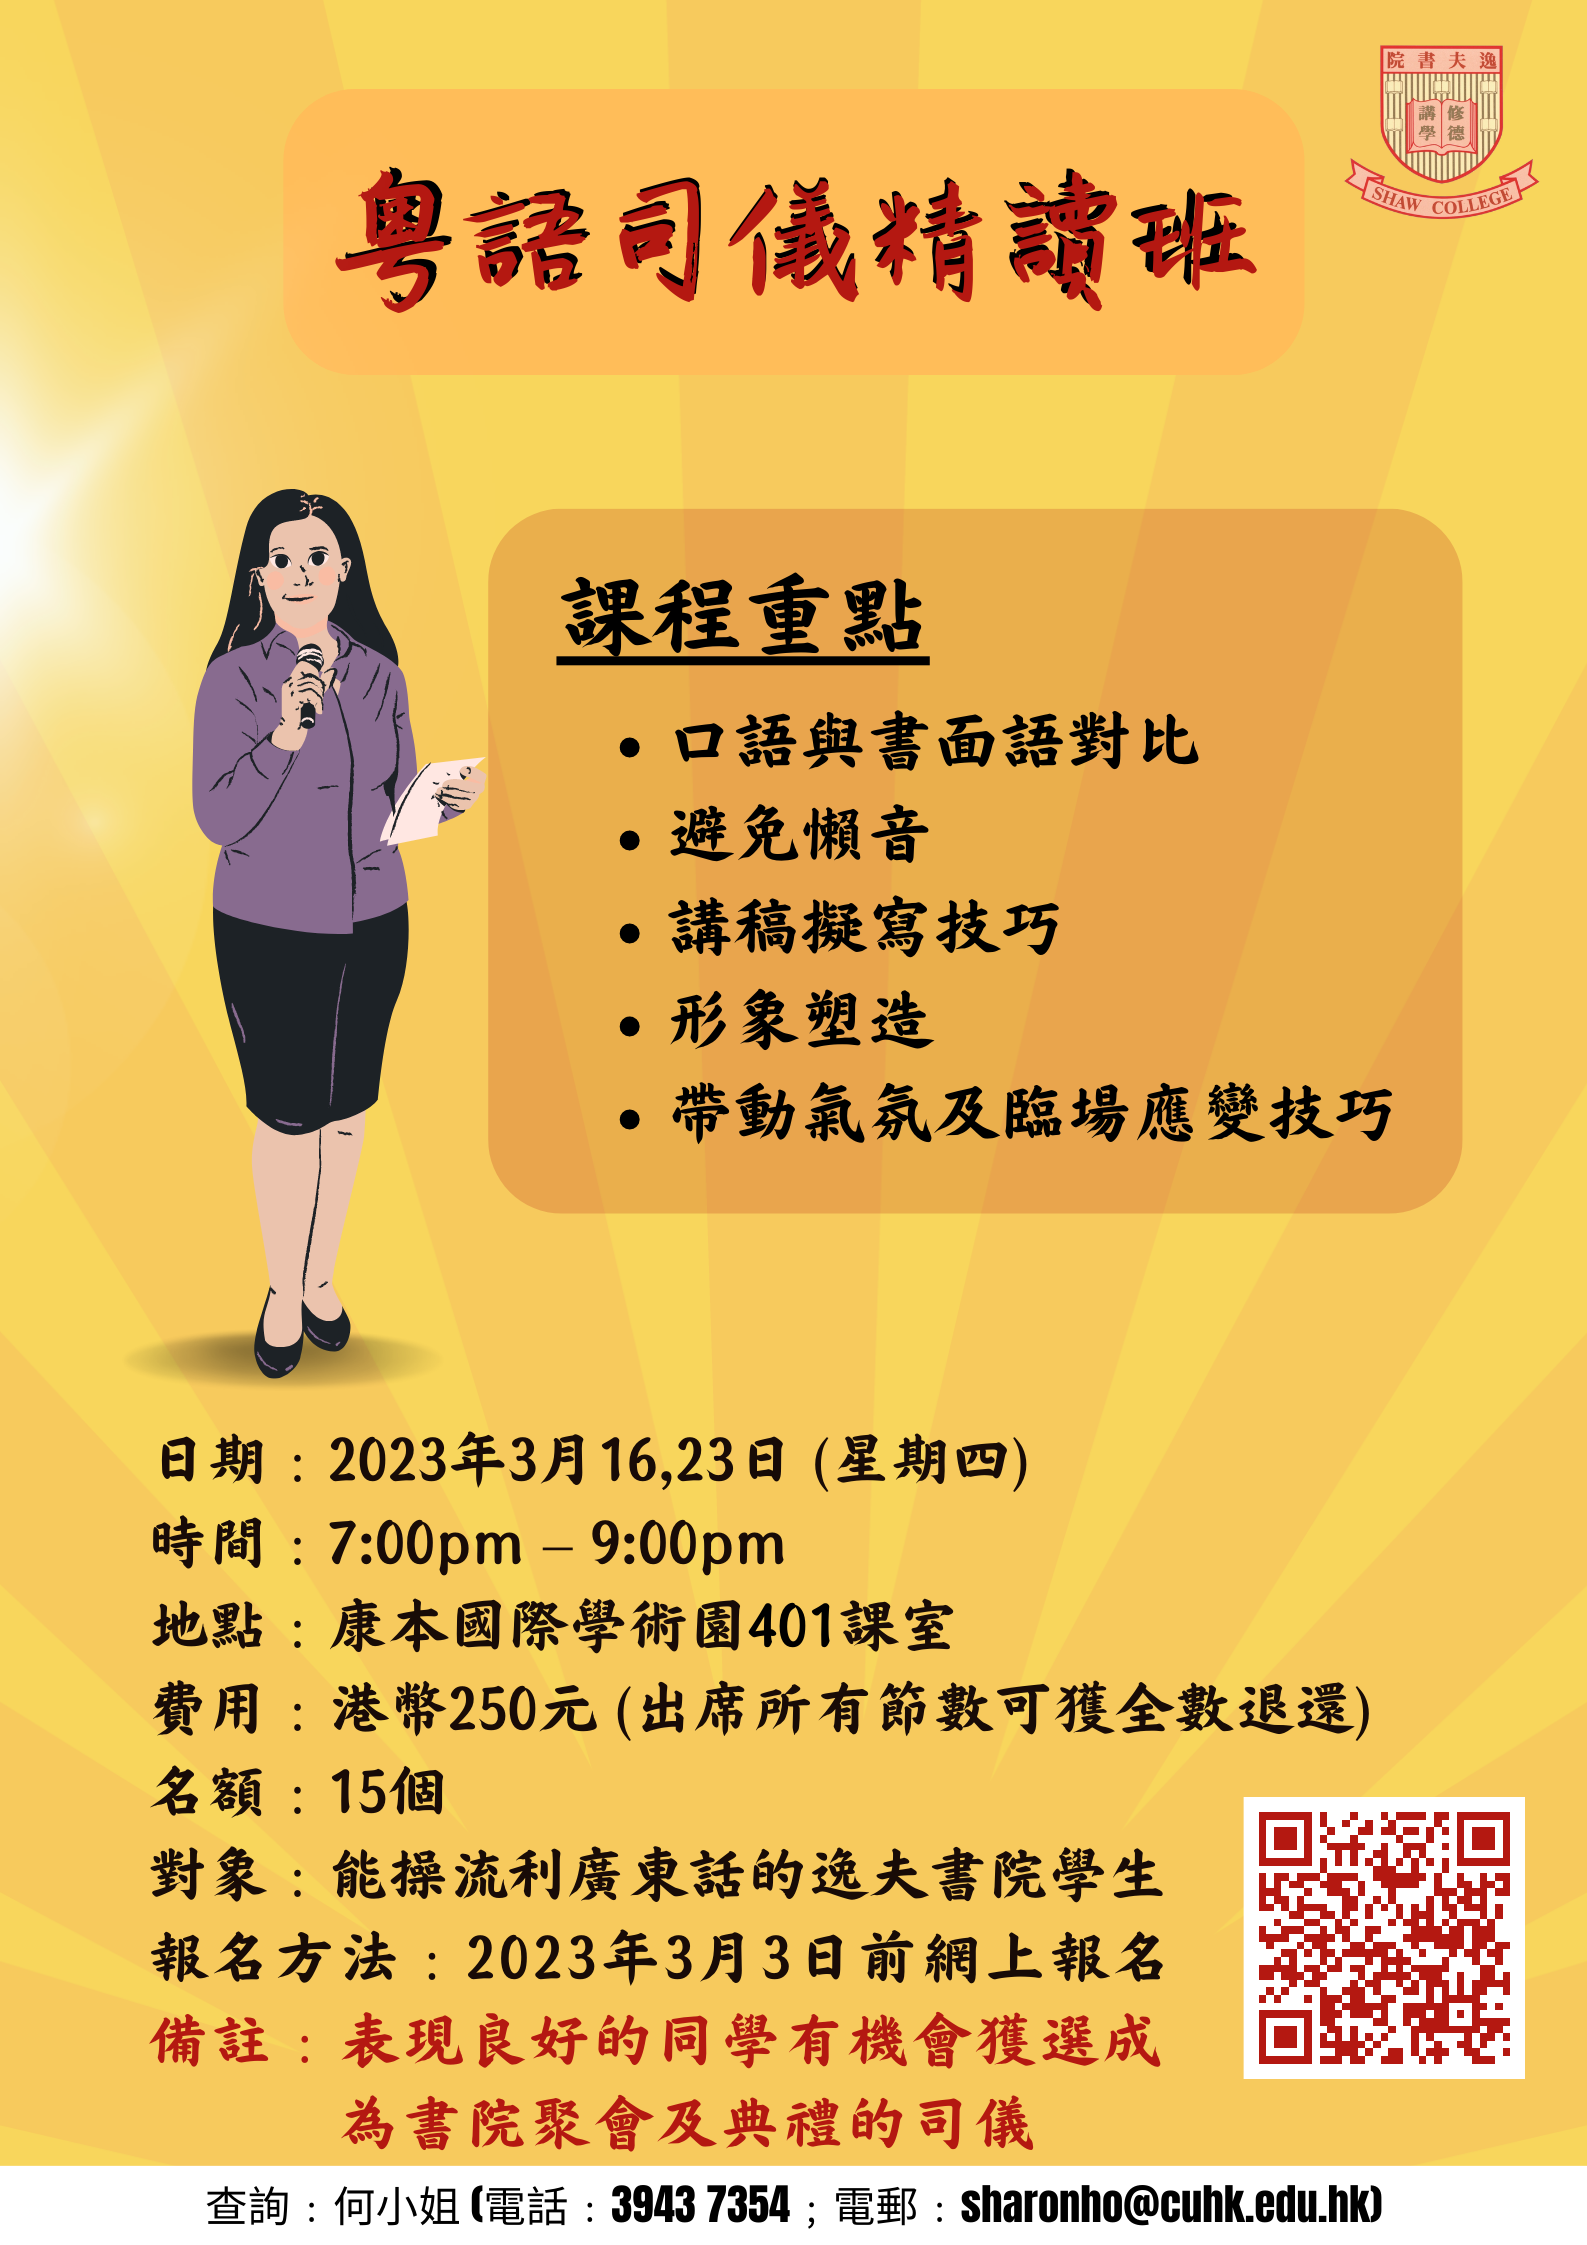 Cantonese workshop on presentation skills for MC